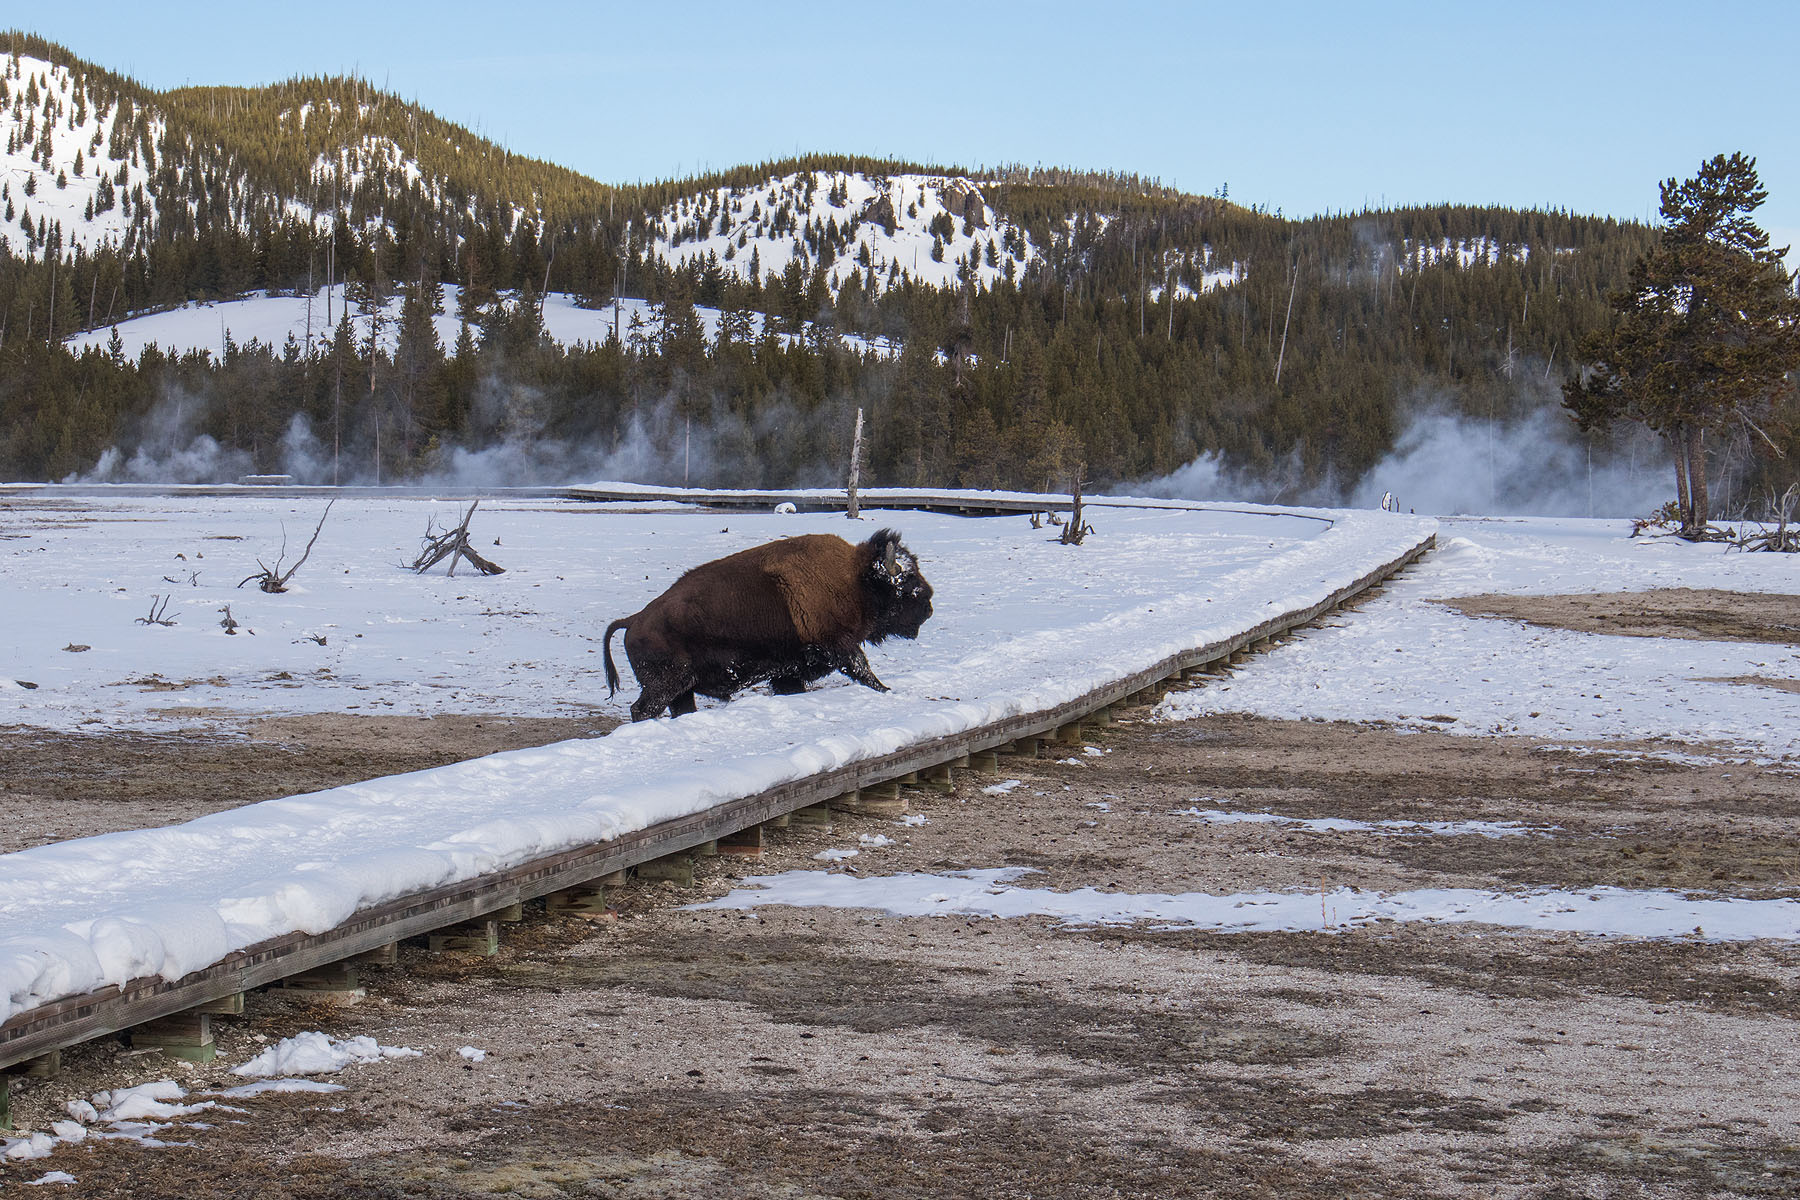 Bison crossing boardwalk in geyser field.  Click for next photo.